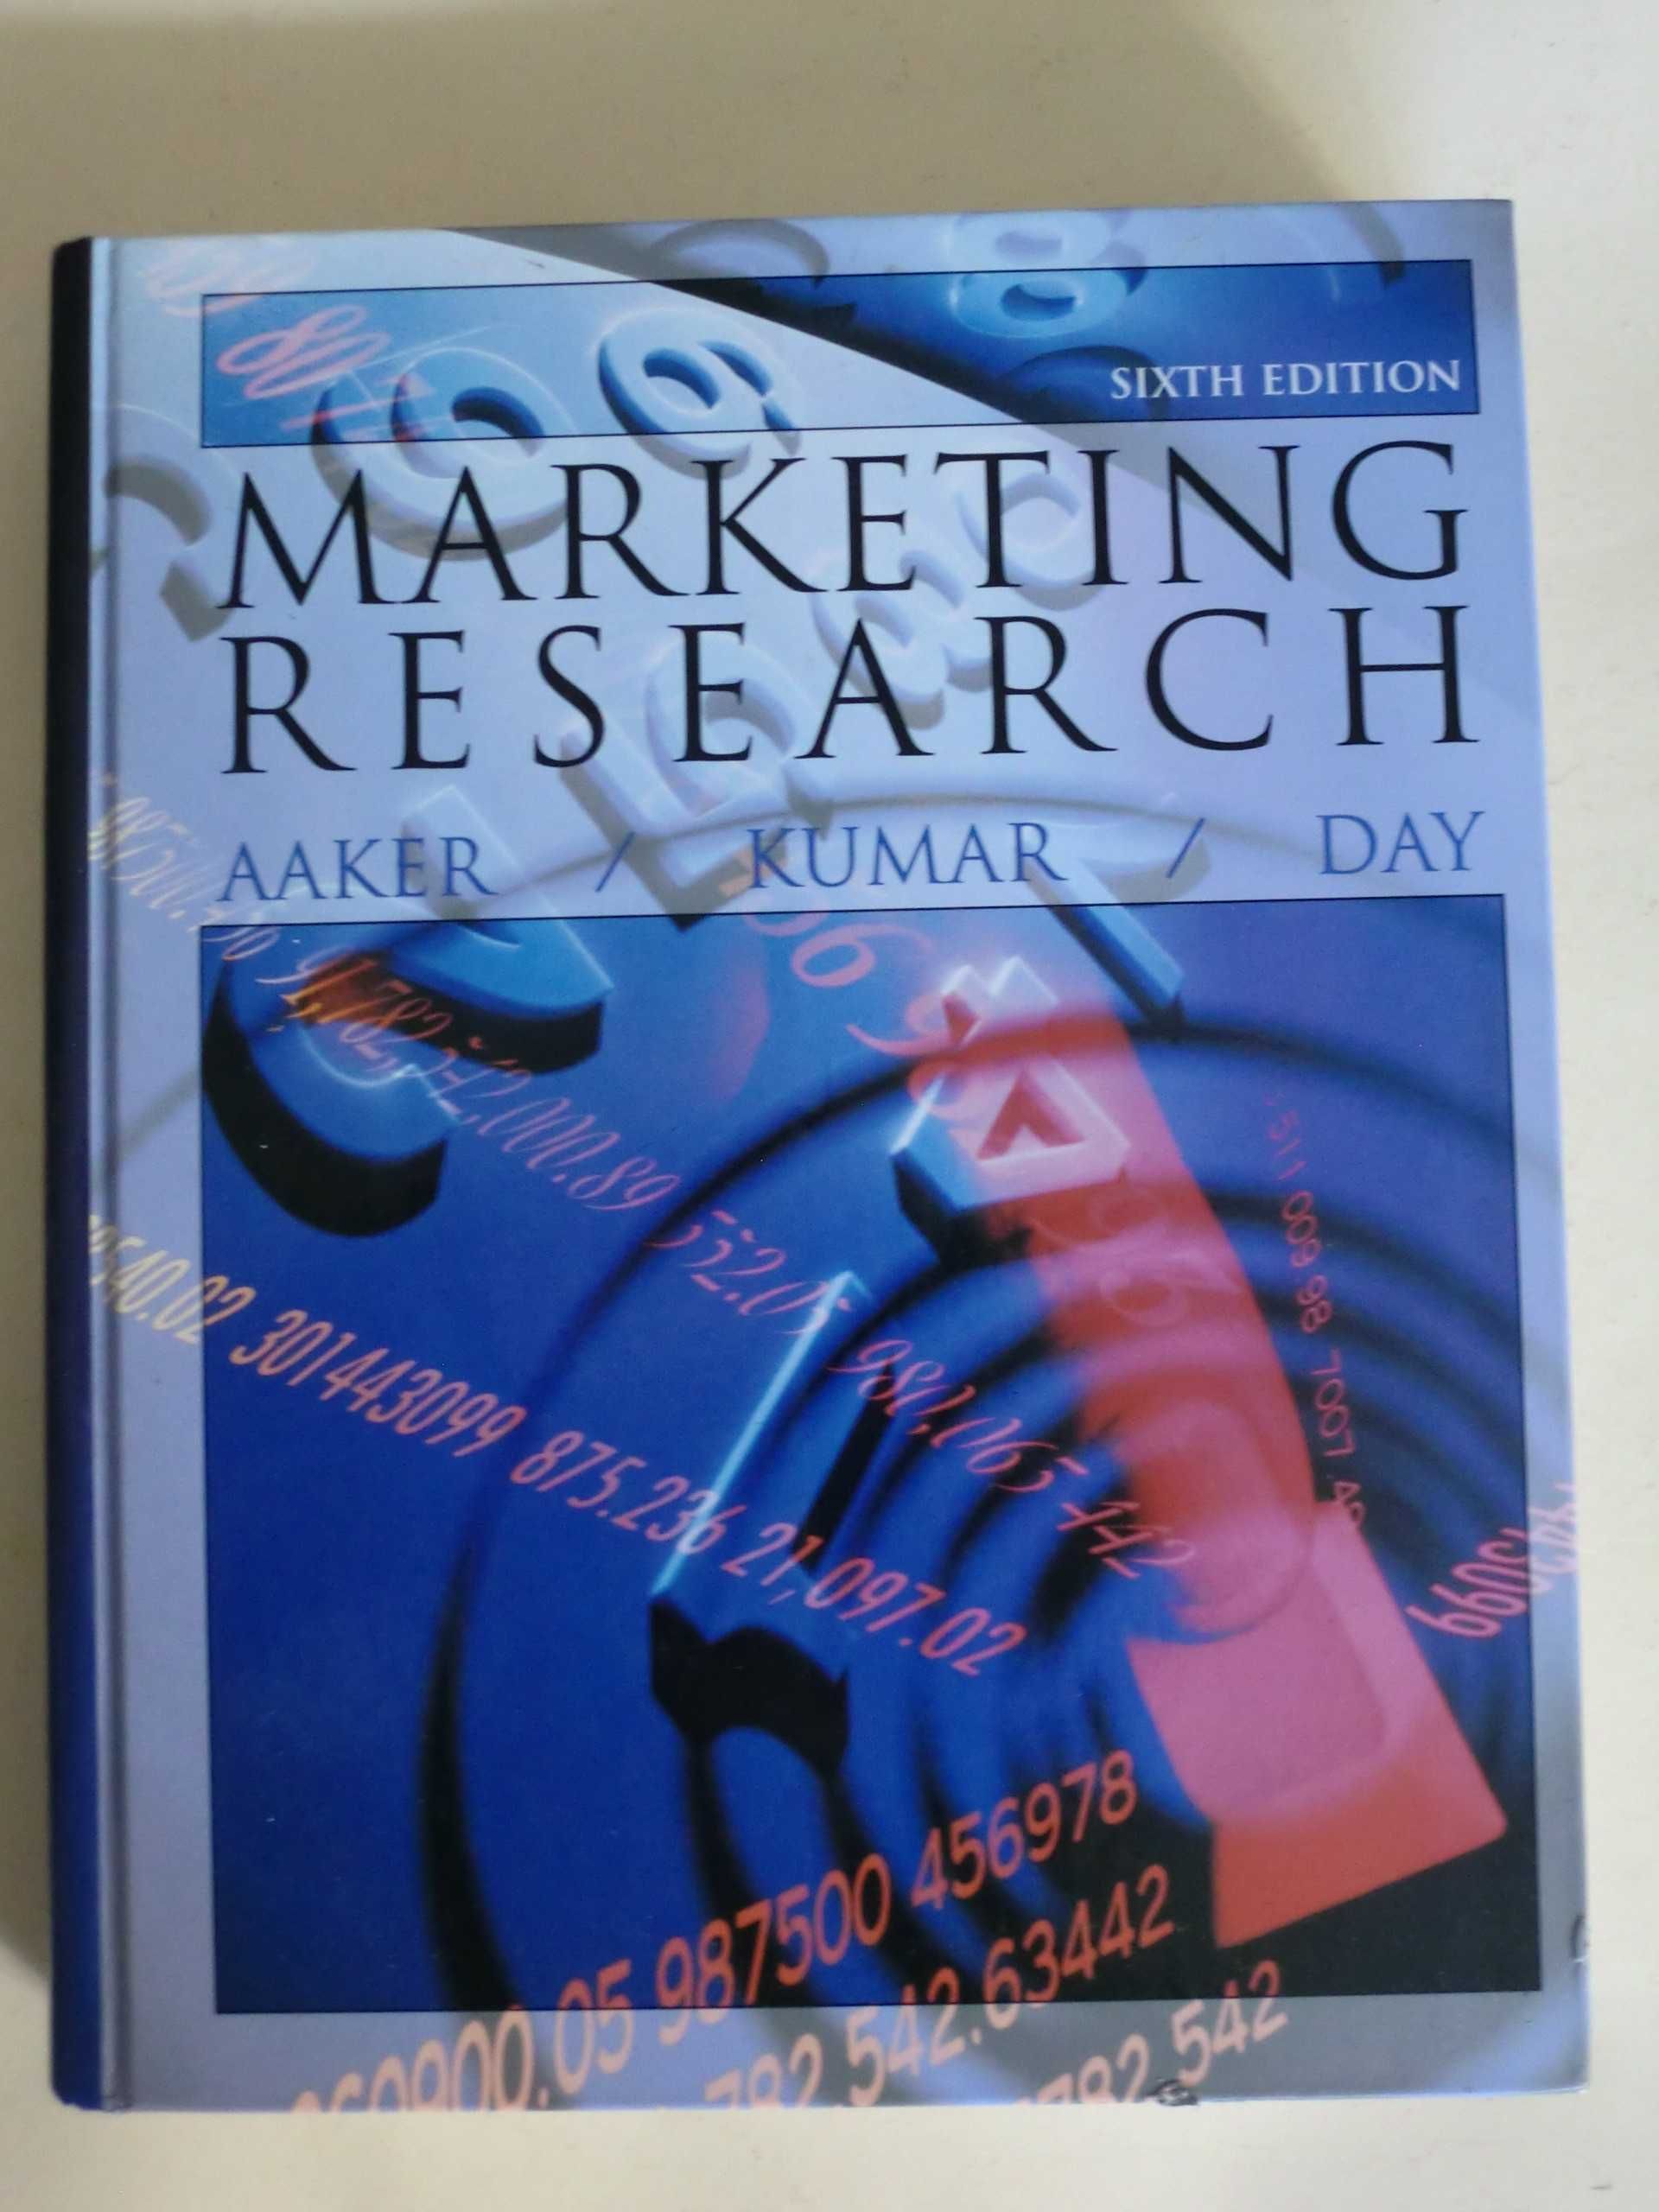 Marketing Research
de David A. Aaker, George S. Day e V. Kumar